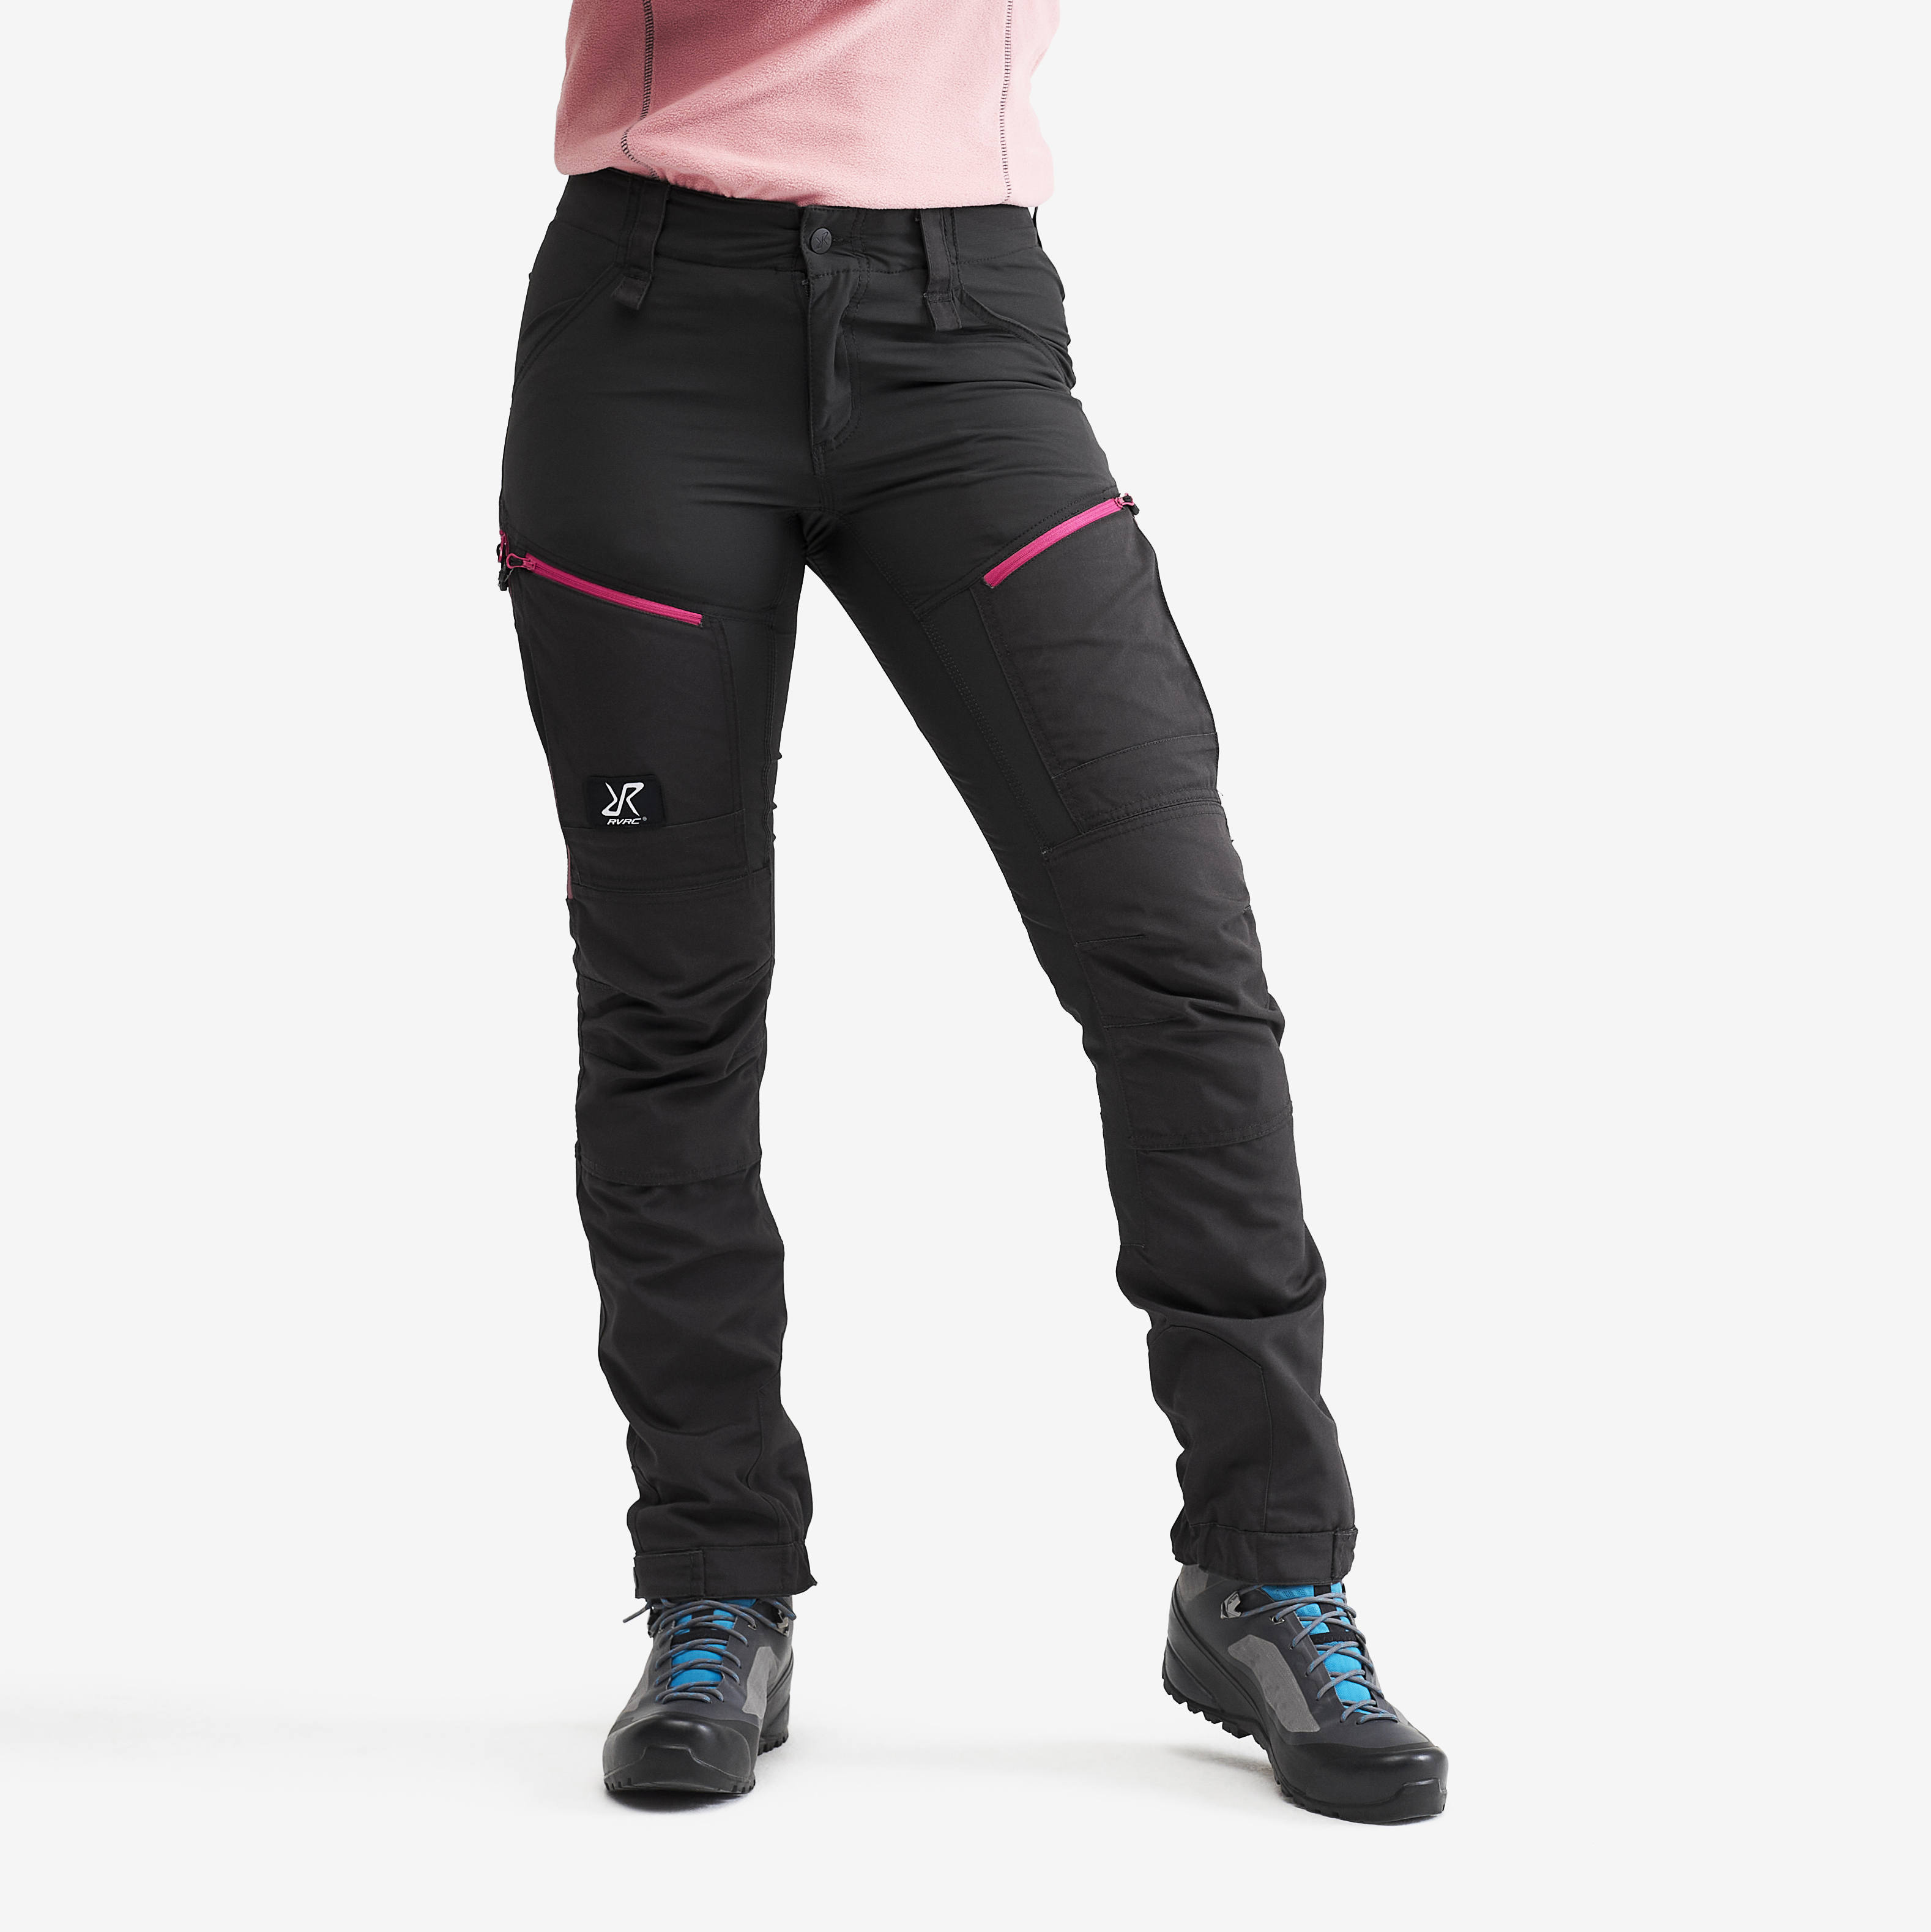 RVRC GP Pro Pants Grey/Pink Naiset